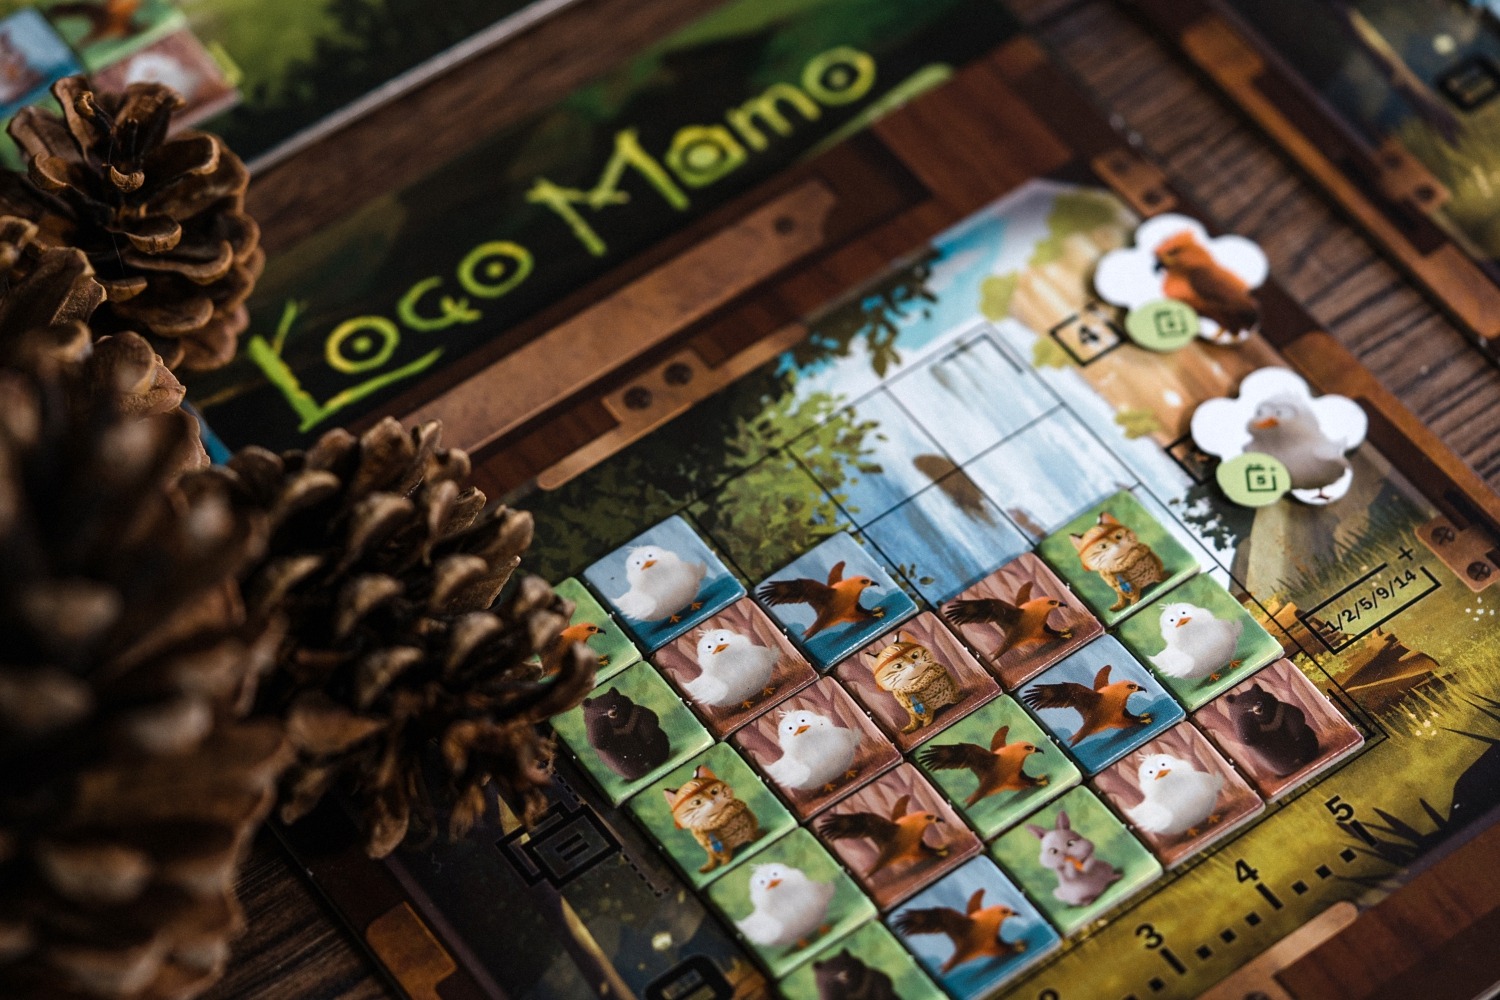 loco momo jeu société boardgame photography blam